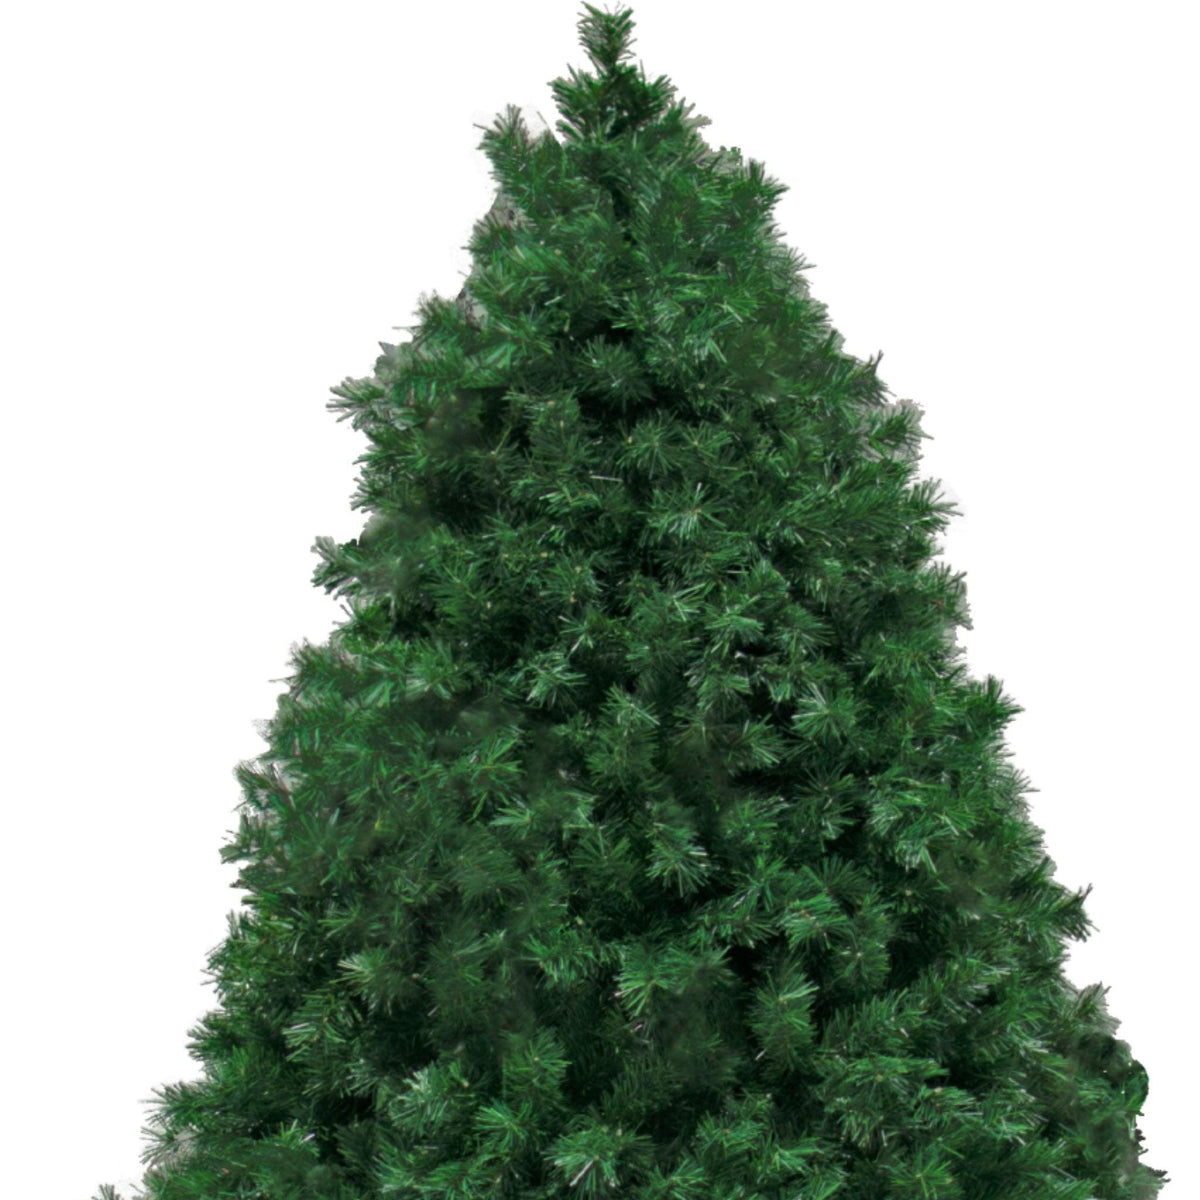 Lee Display's Original 10FT Premier Pine Christmas Trees Pre-Lit with LED Warm White Steady Lights on sale at leedisplay.com